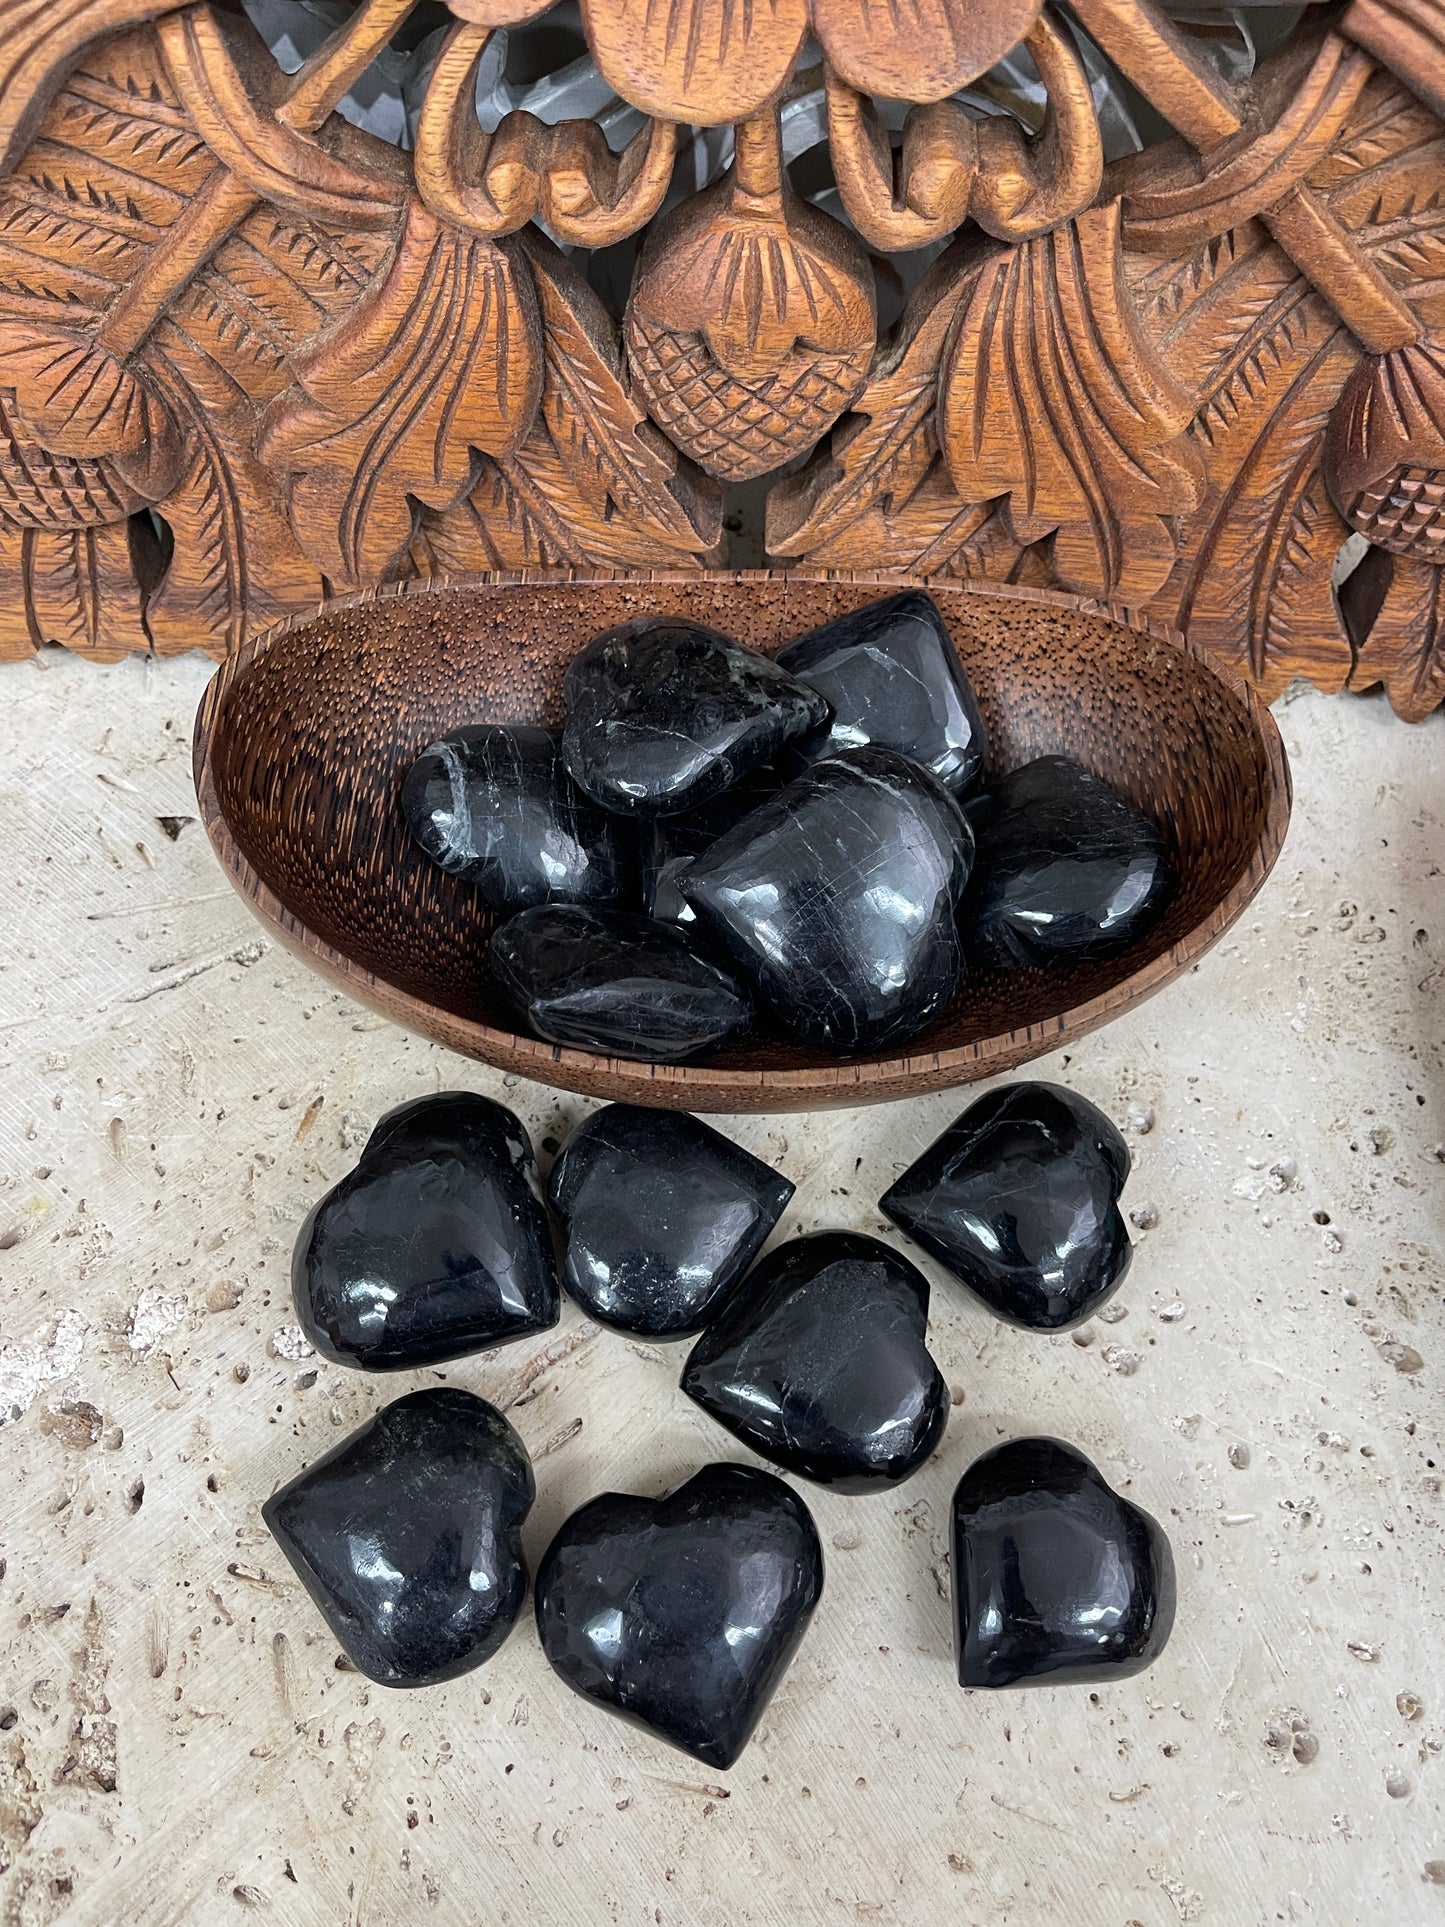 Large Black Tourmaline Hearts